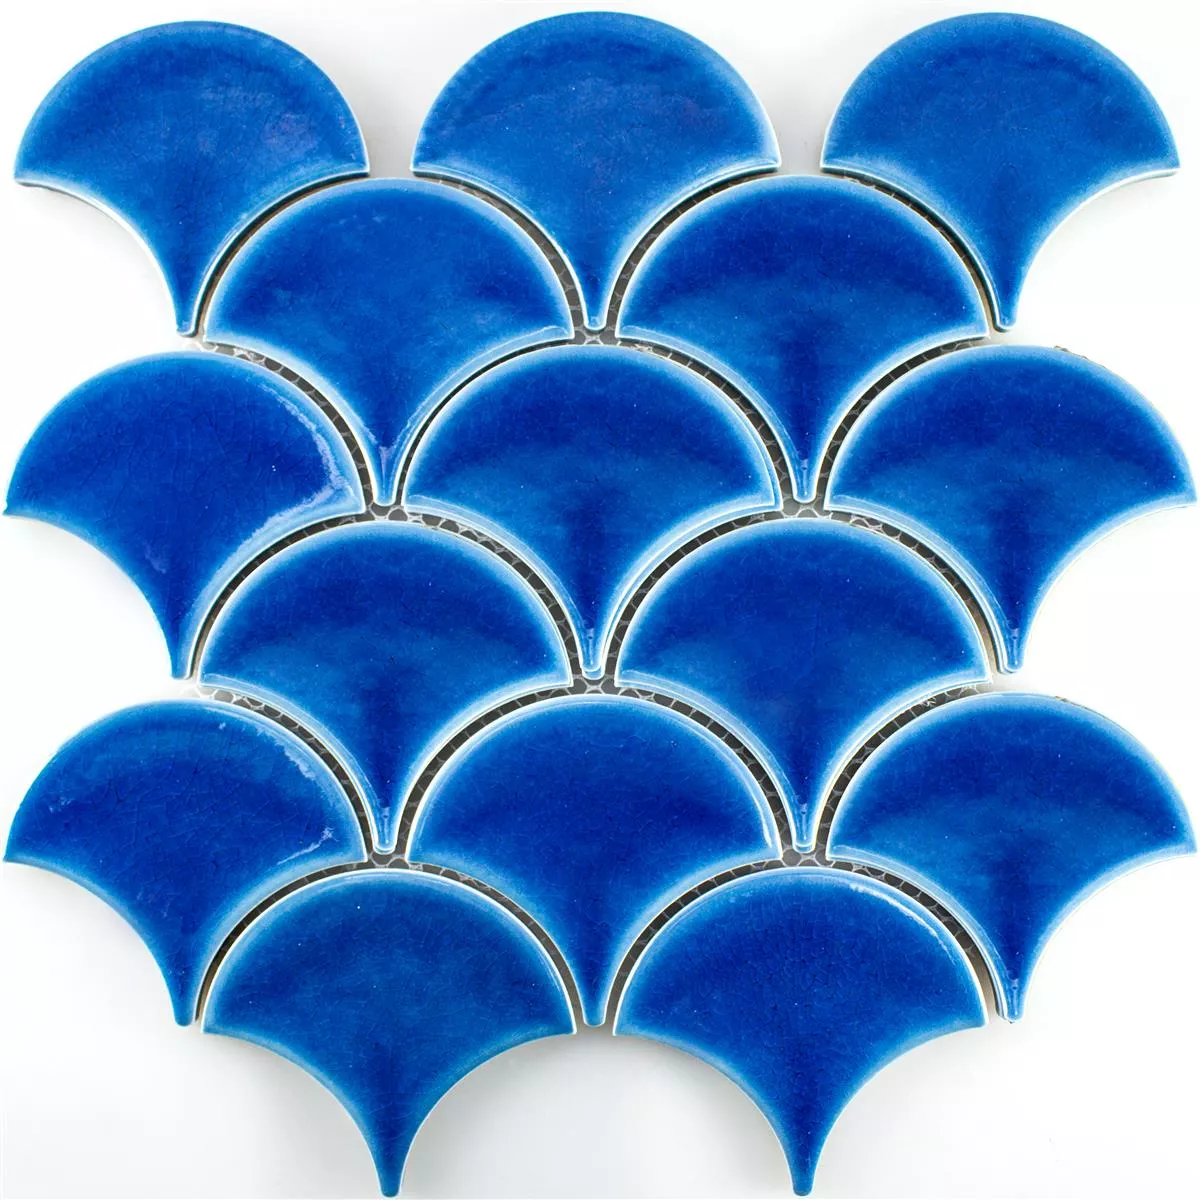 Ceramic Mosaic Tiles Newark Blue